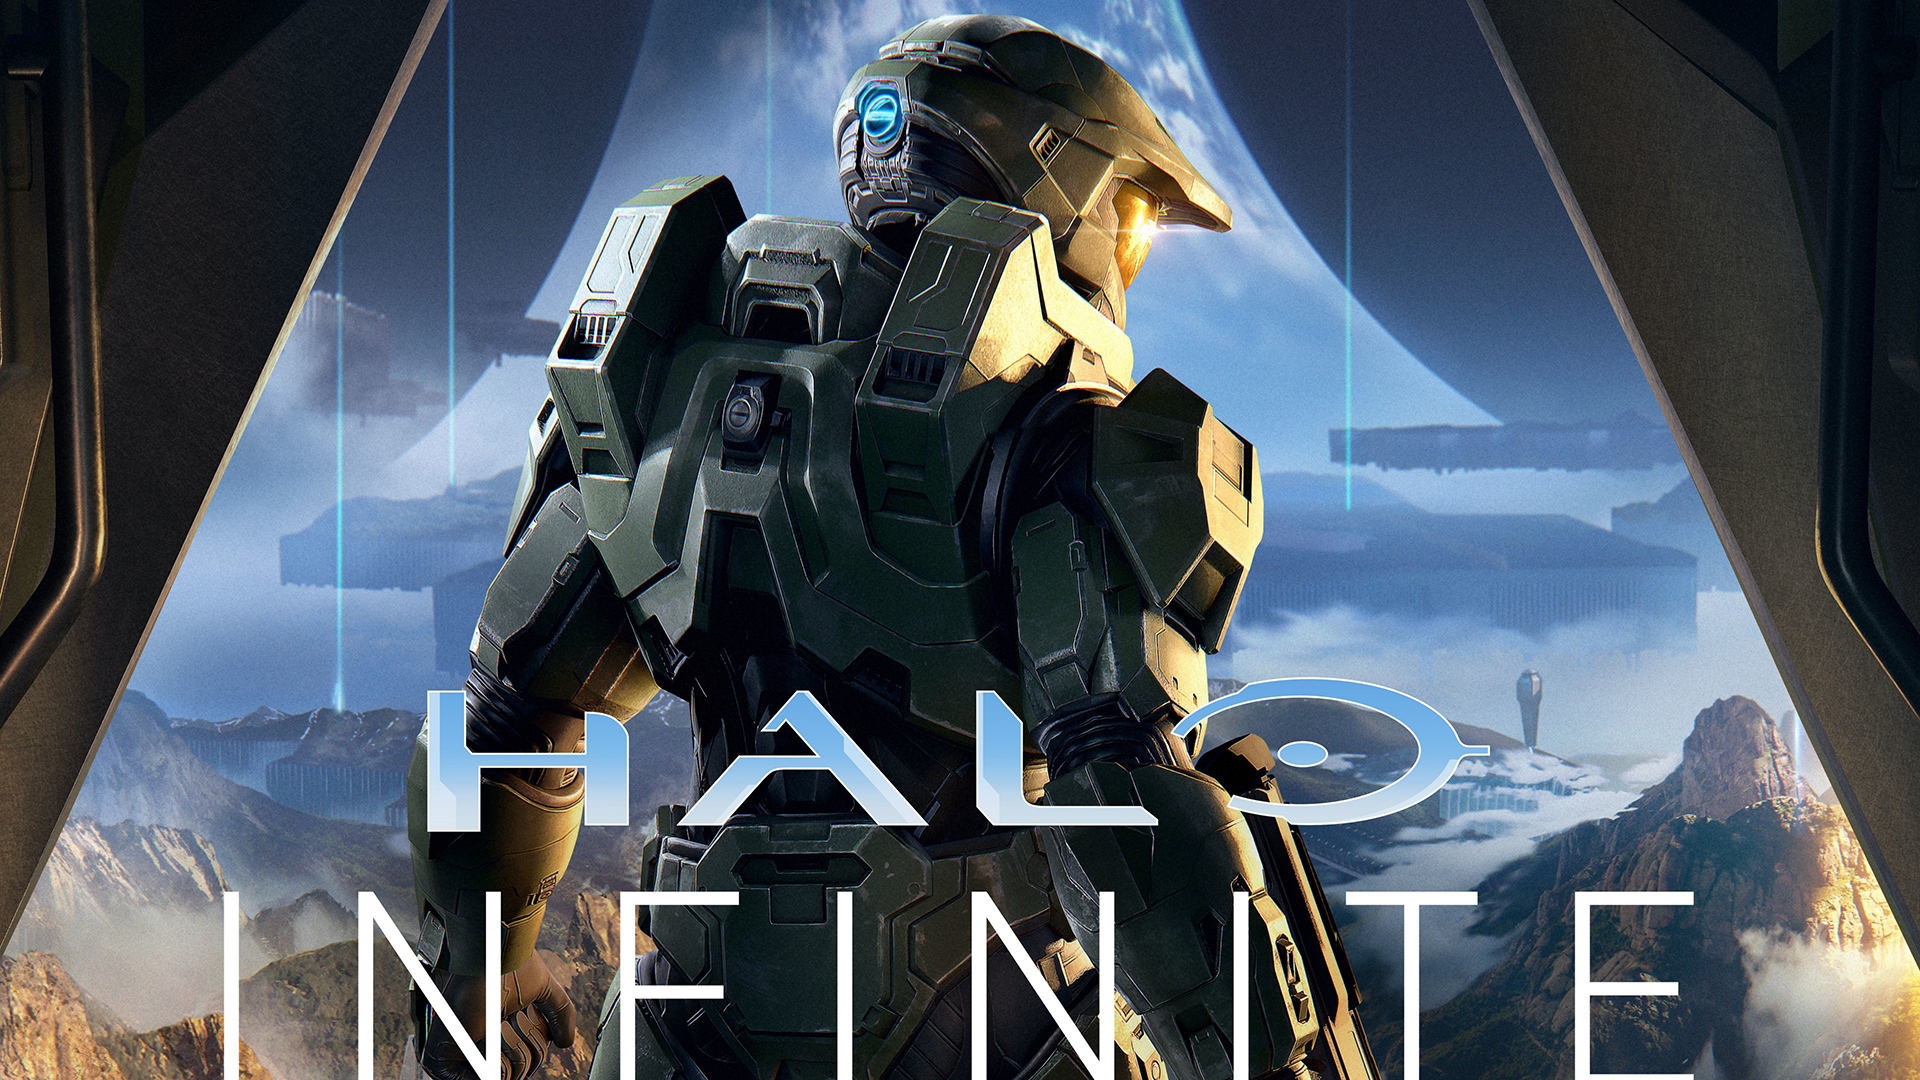 Halo Infinite Wallpapers in Ultra HD | 4K - Gameranx1920 x 1080